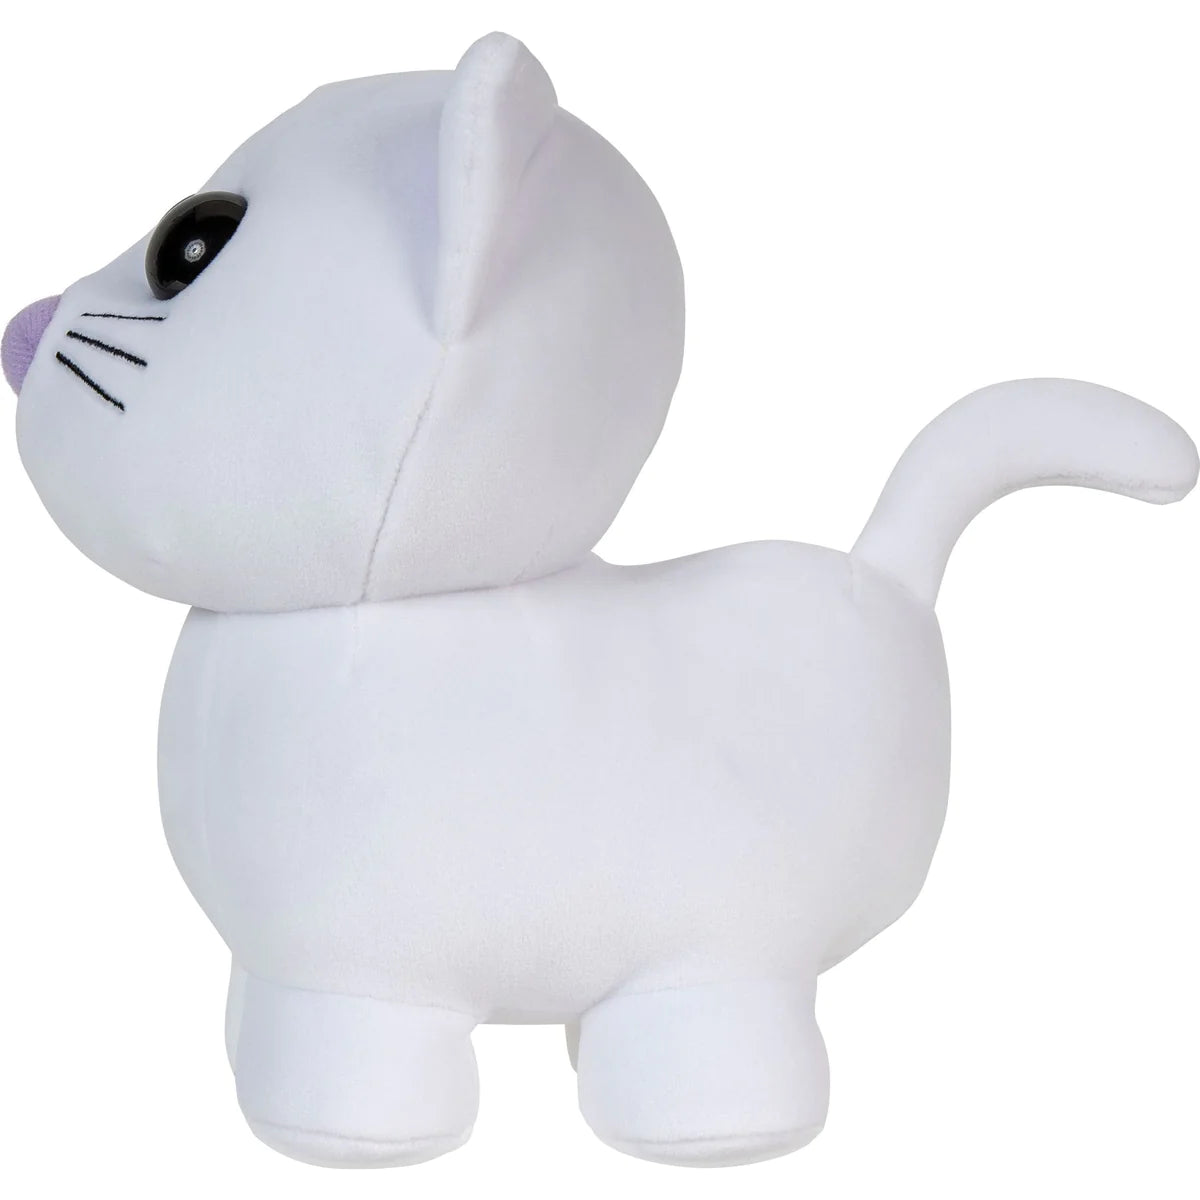 Adopt Me! 8 Collector Plush Pet Unicorn, Stuffed Animal Plush Toy 